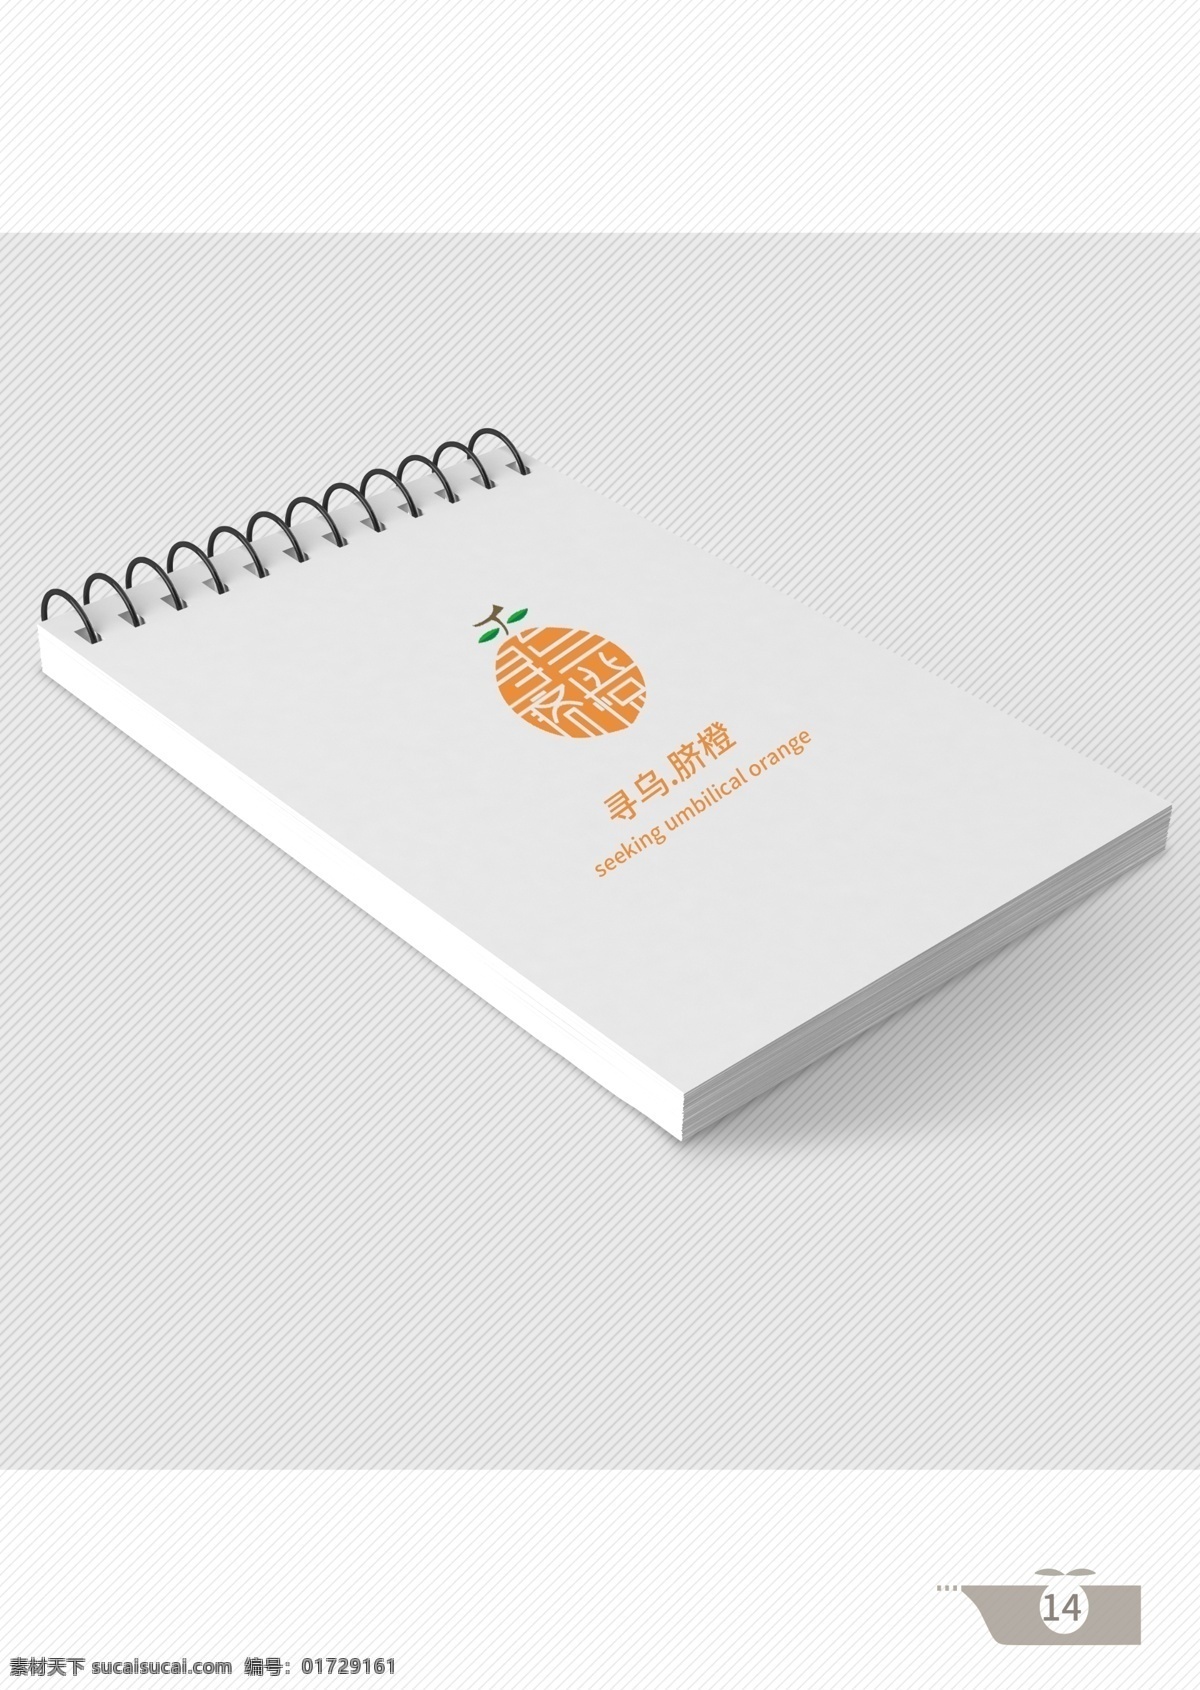 vi手册图片 vi 标志设计 脐橙 手册 排版